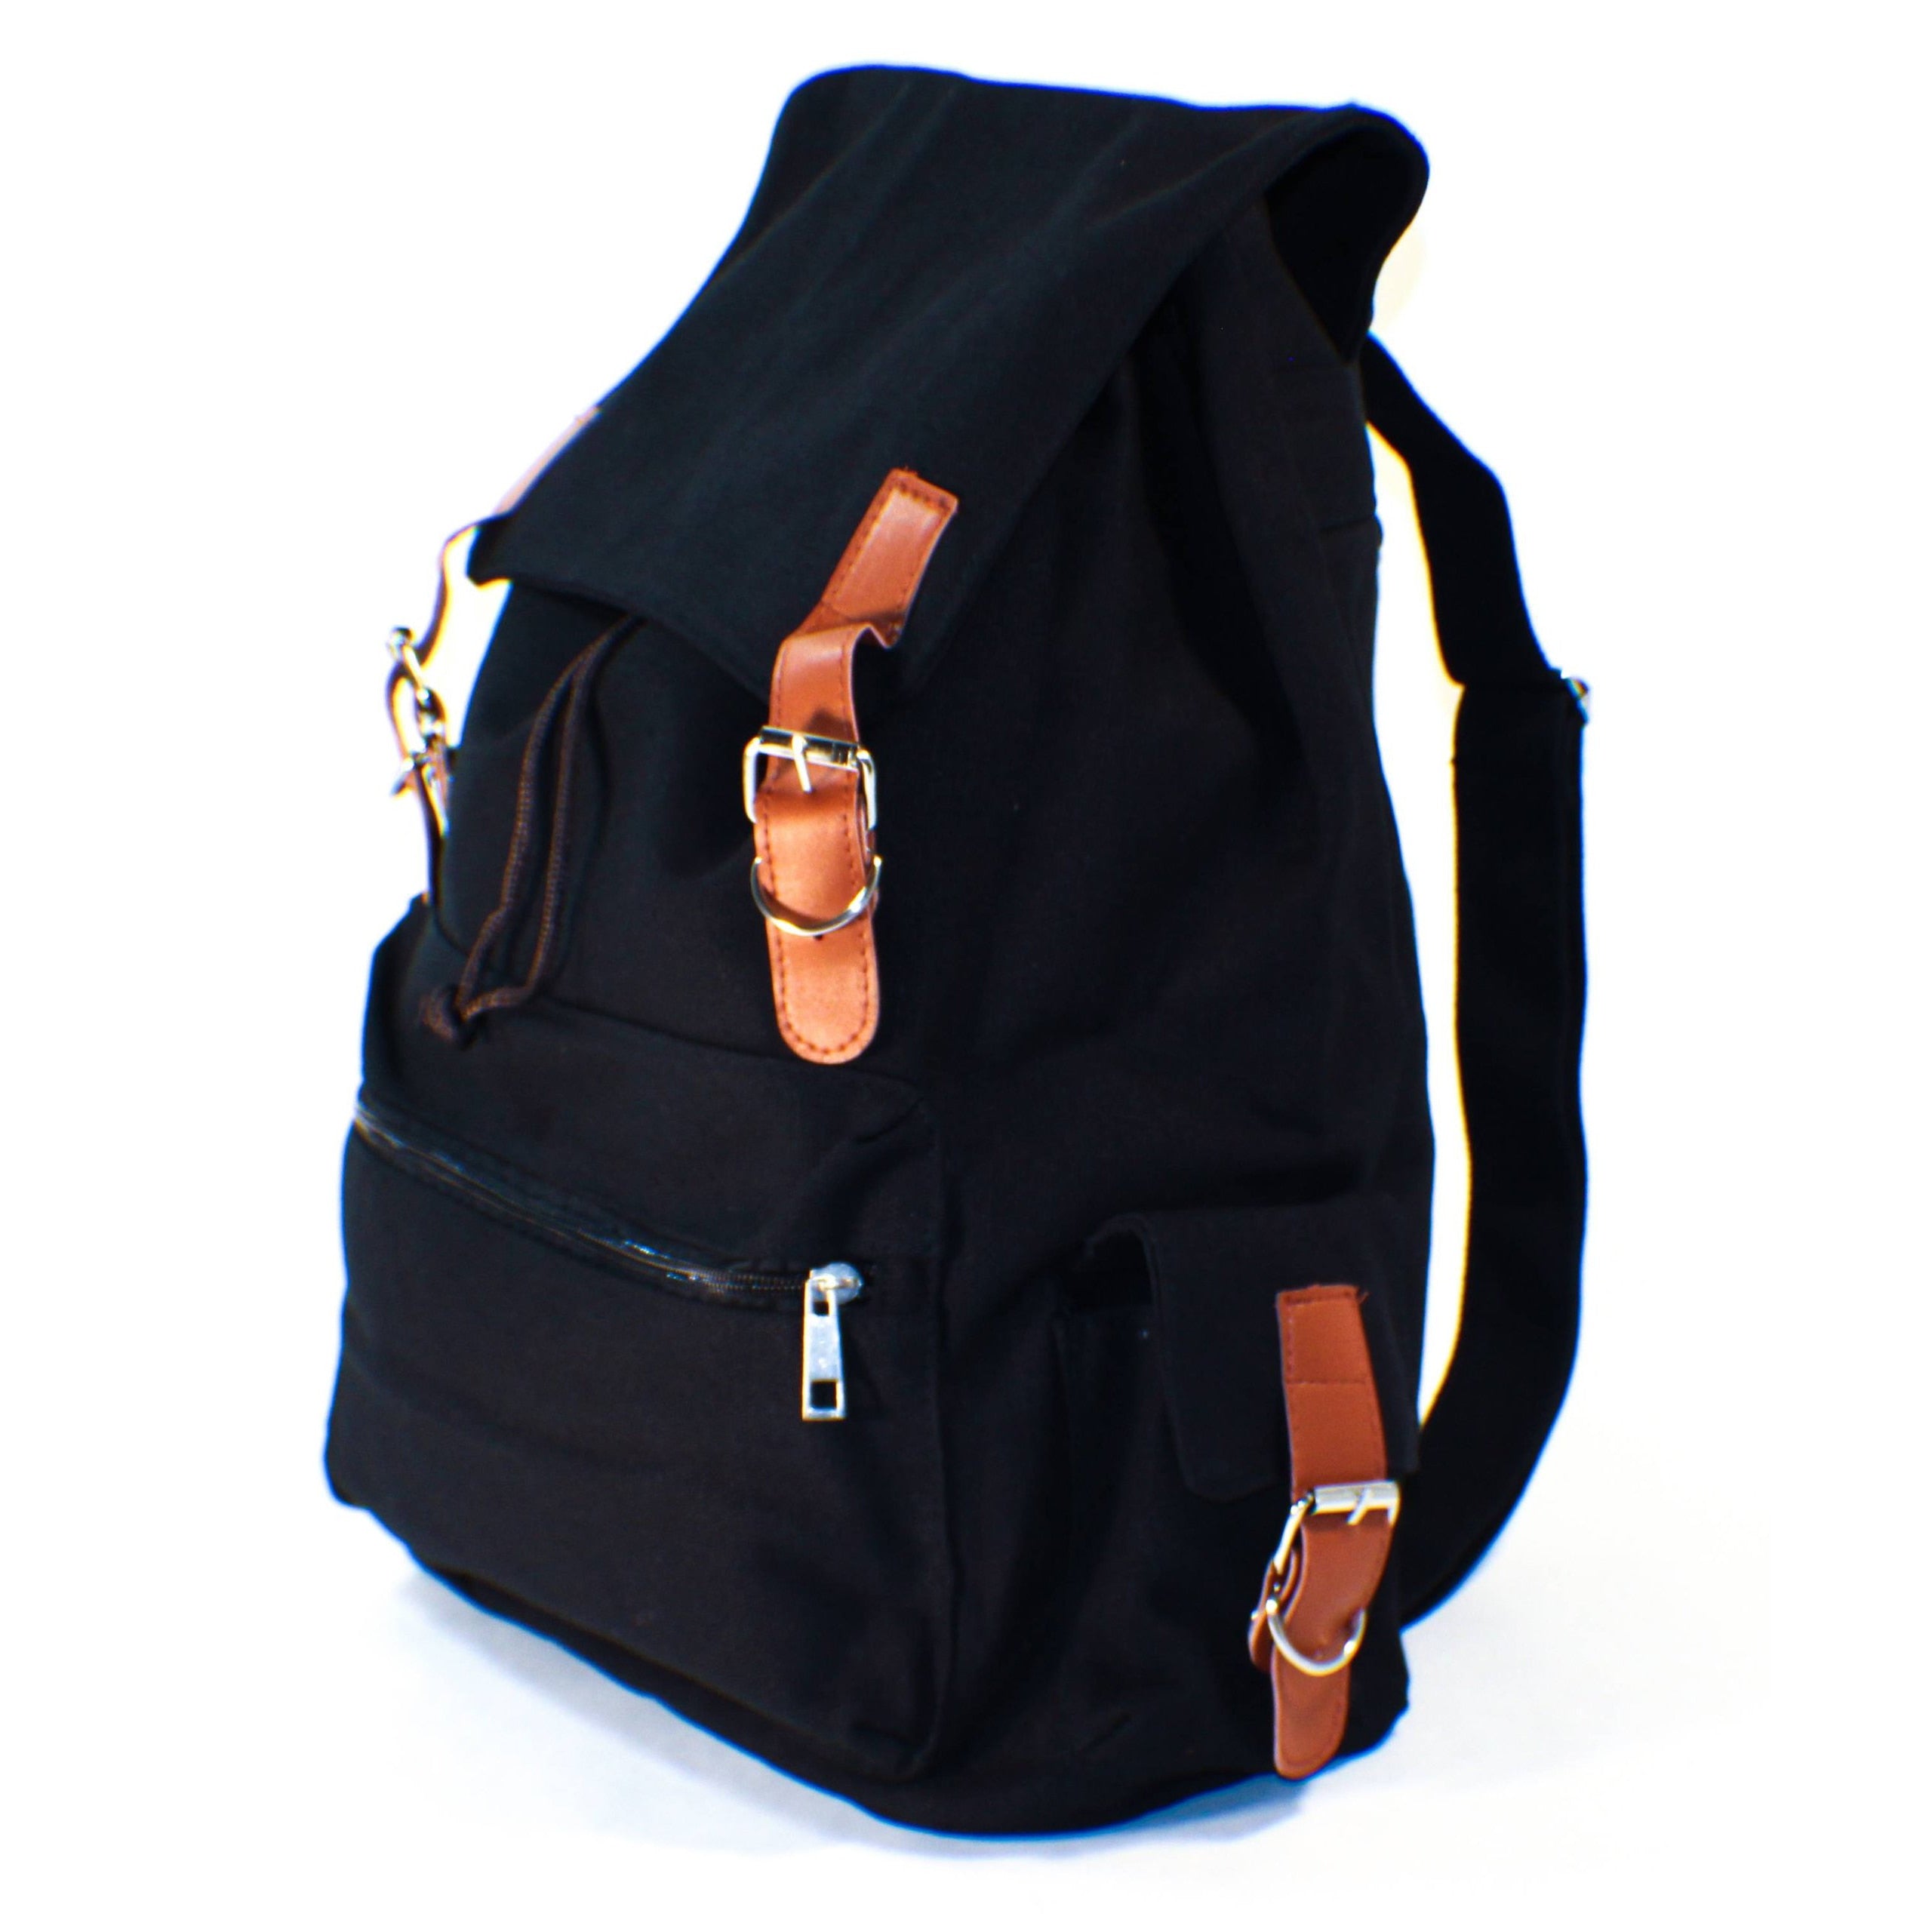 New Black Canvas Backpack School Bag Super Cute for School - ebowsos